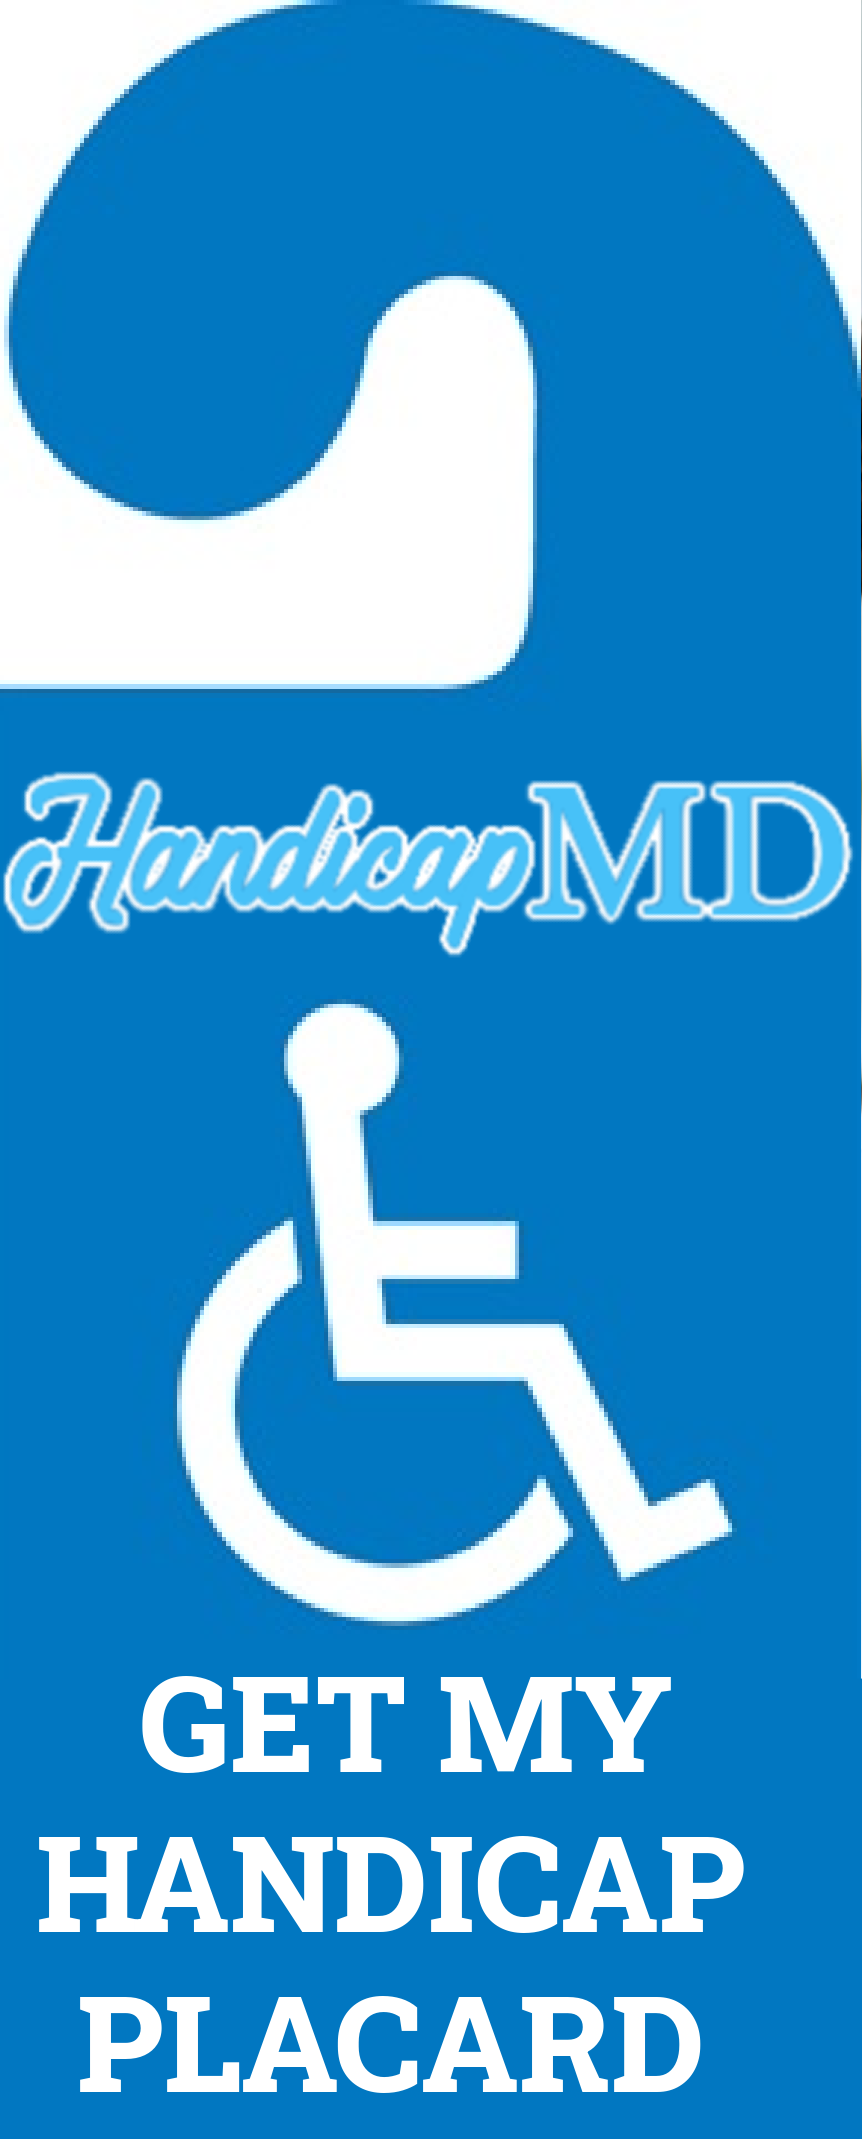 Minnesota Handicap Parking Placards